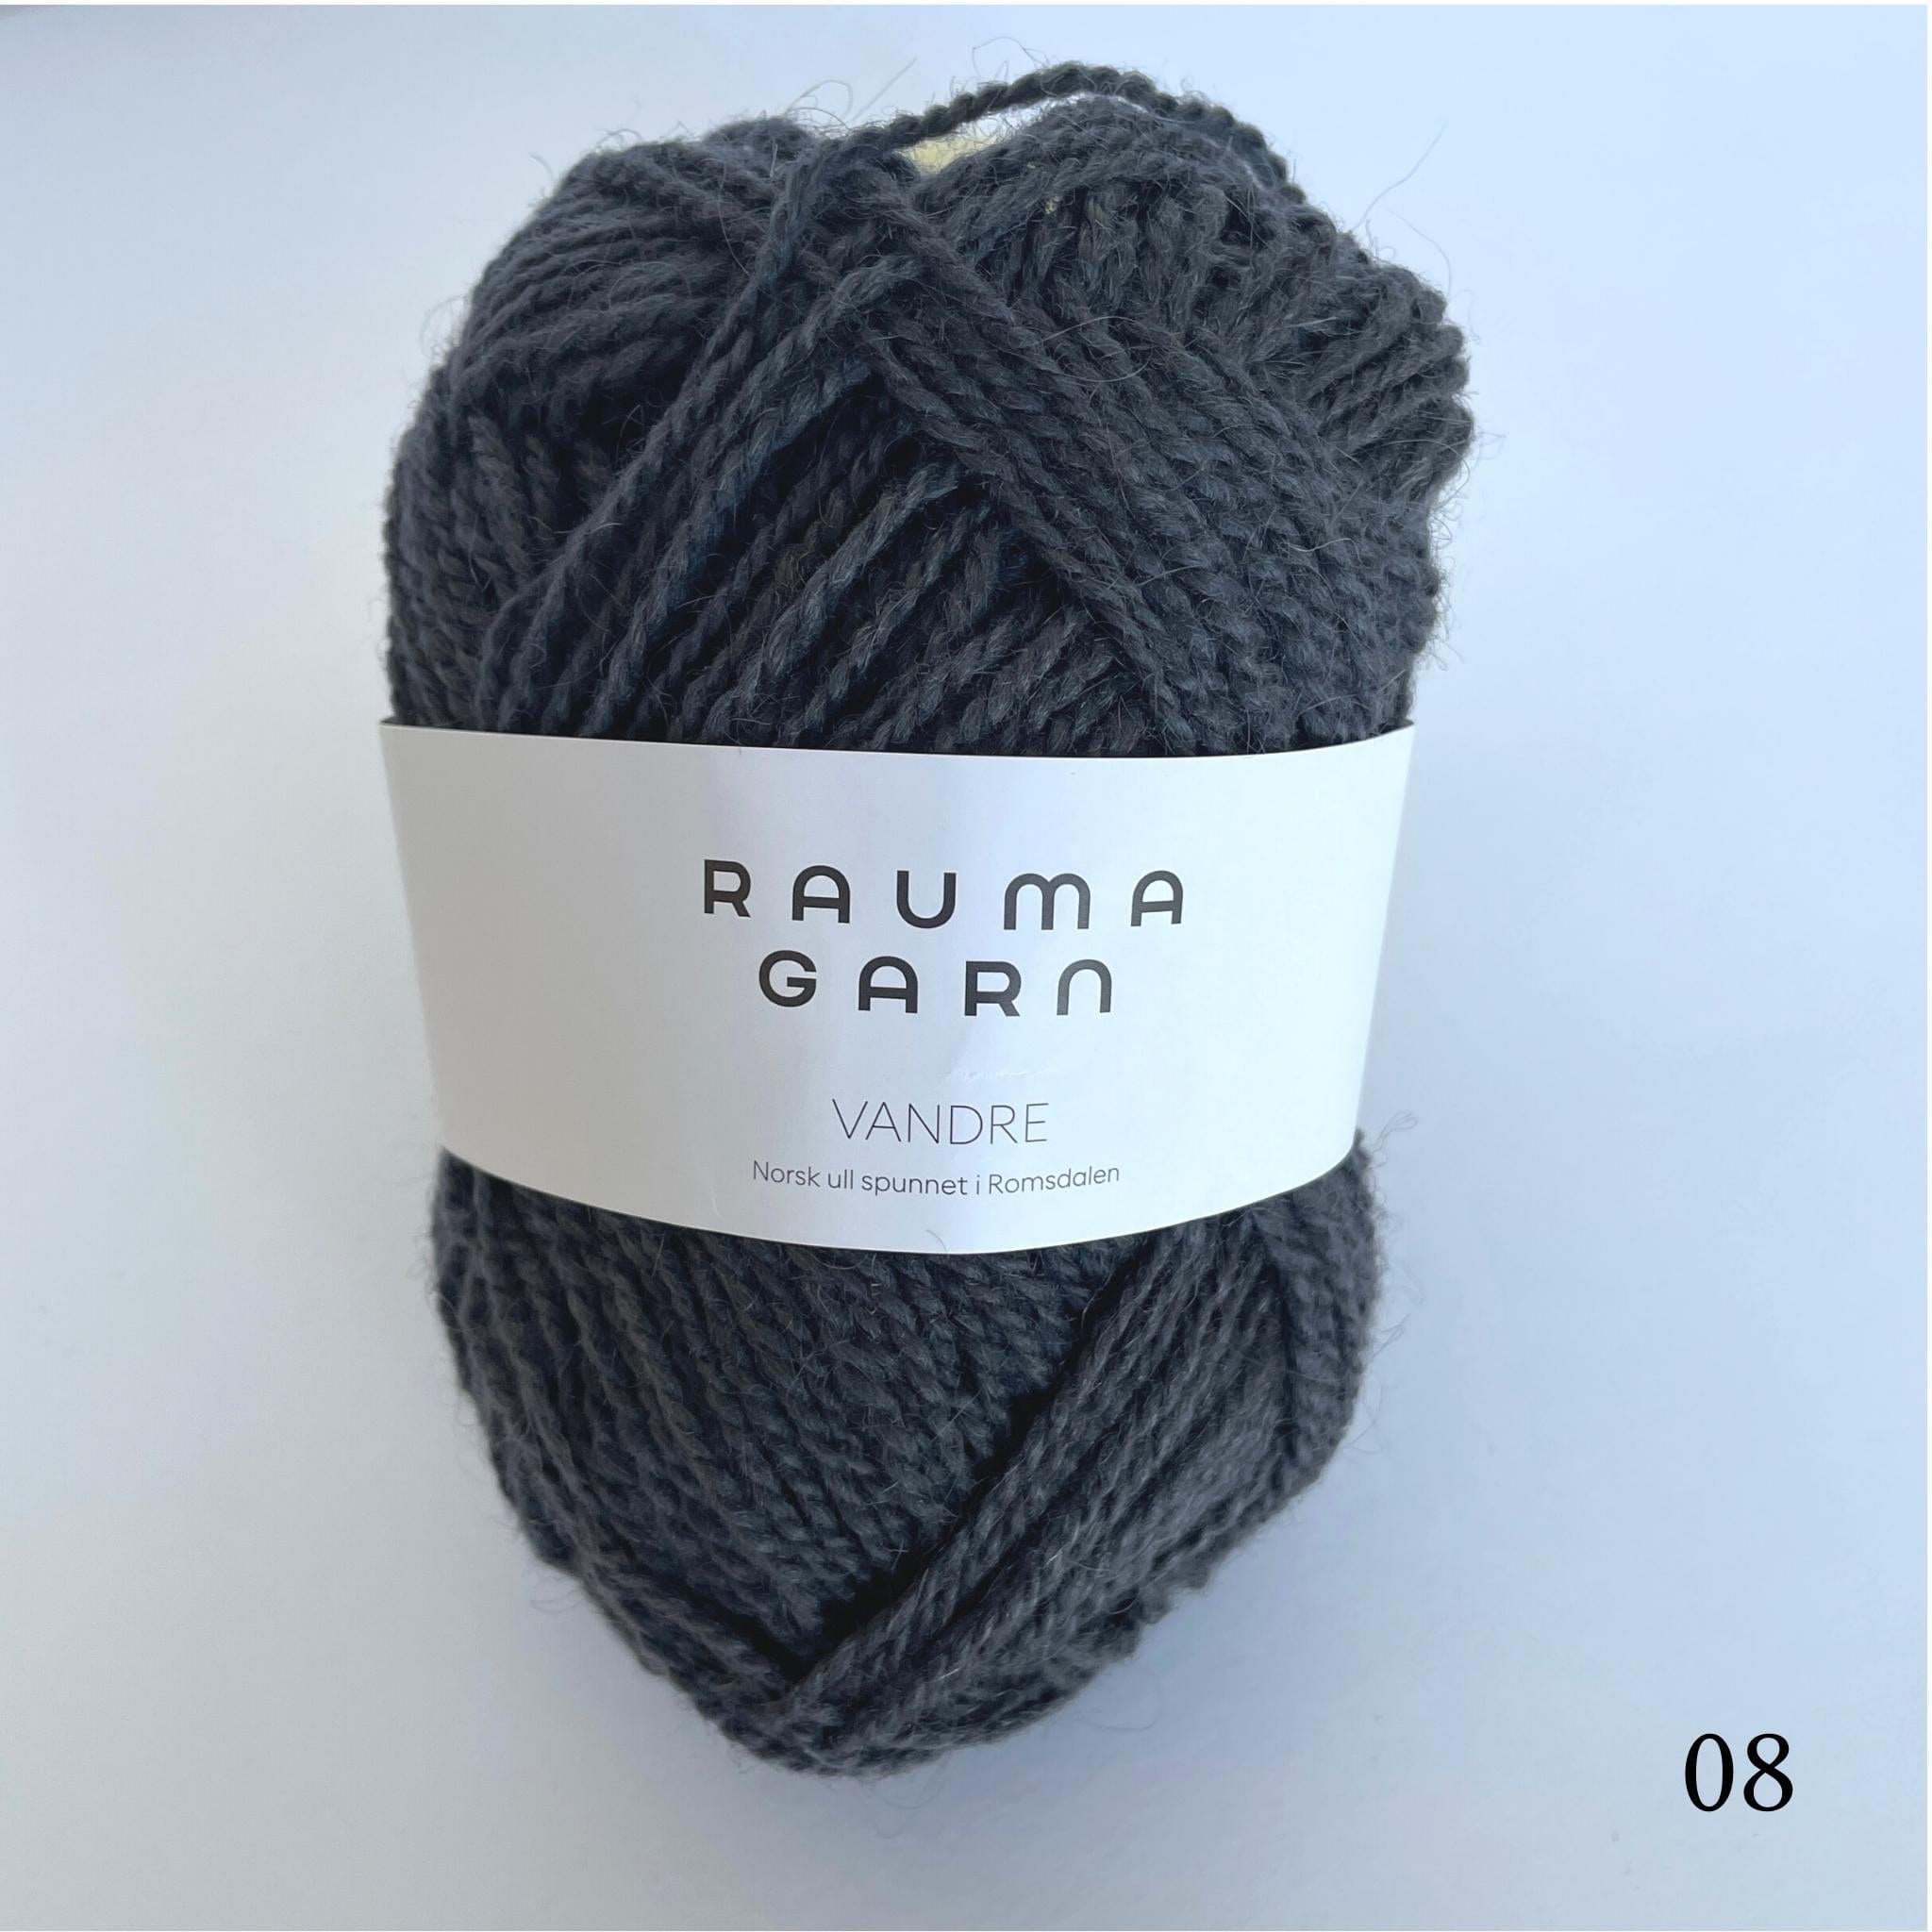 One ball of Rauma Vandre yarn grey/blue color 08